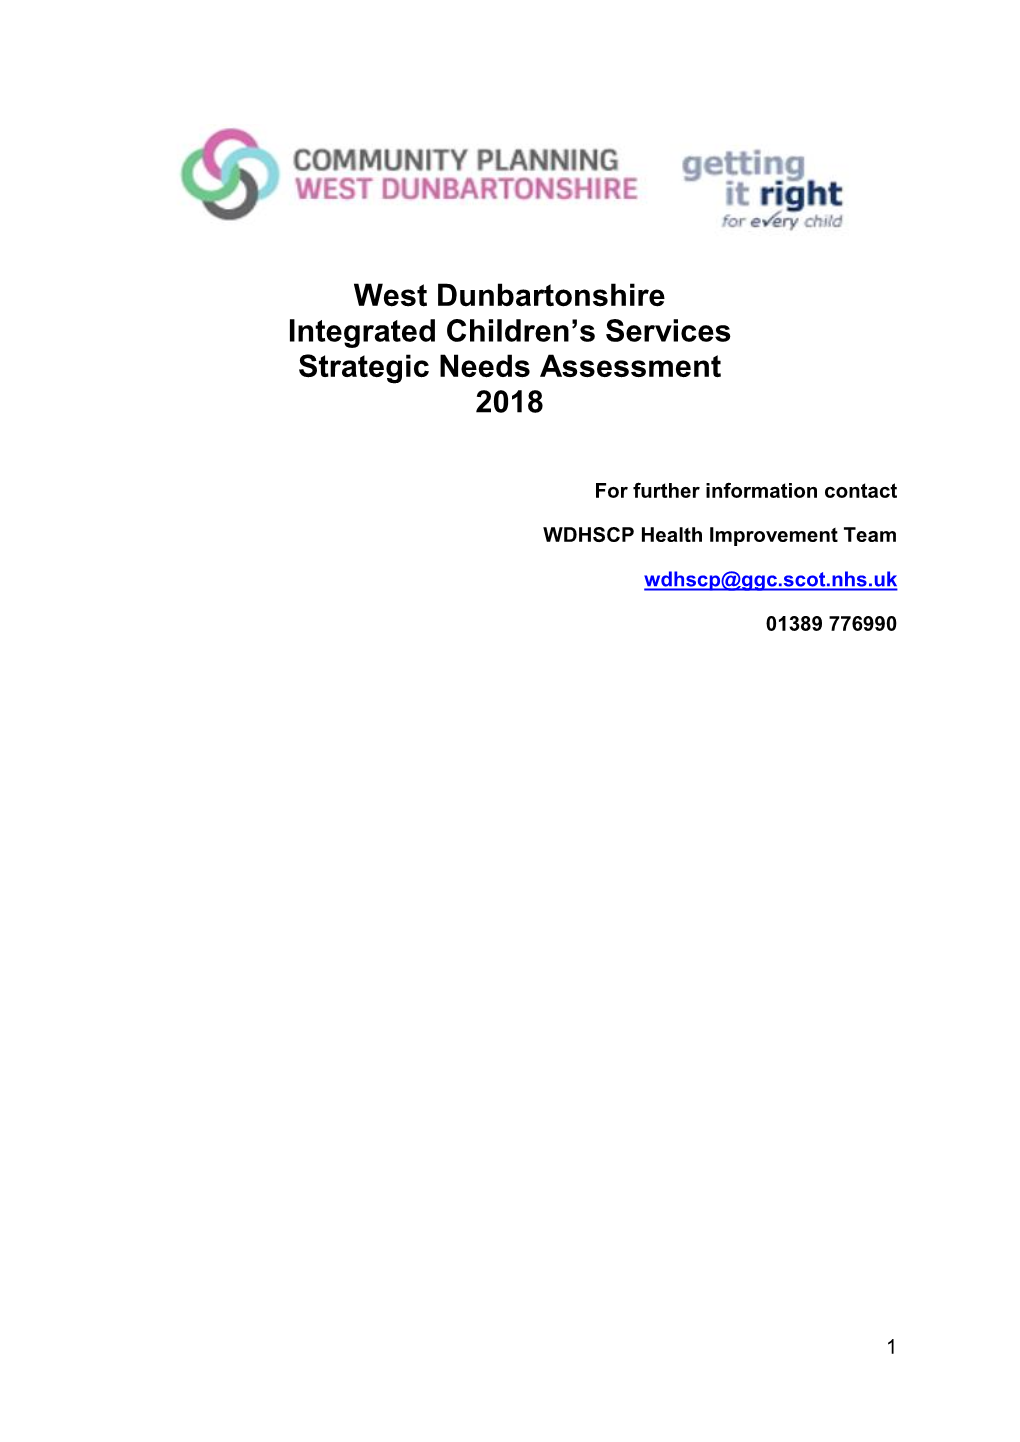 West Dunbartonshire Integrated Children's Services Strategic Needs